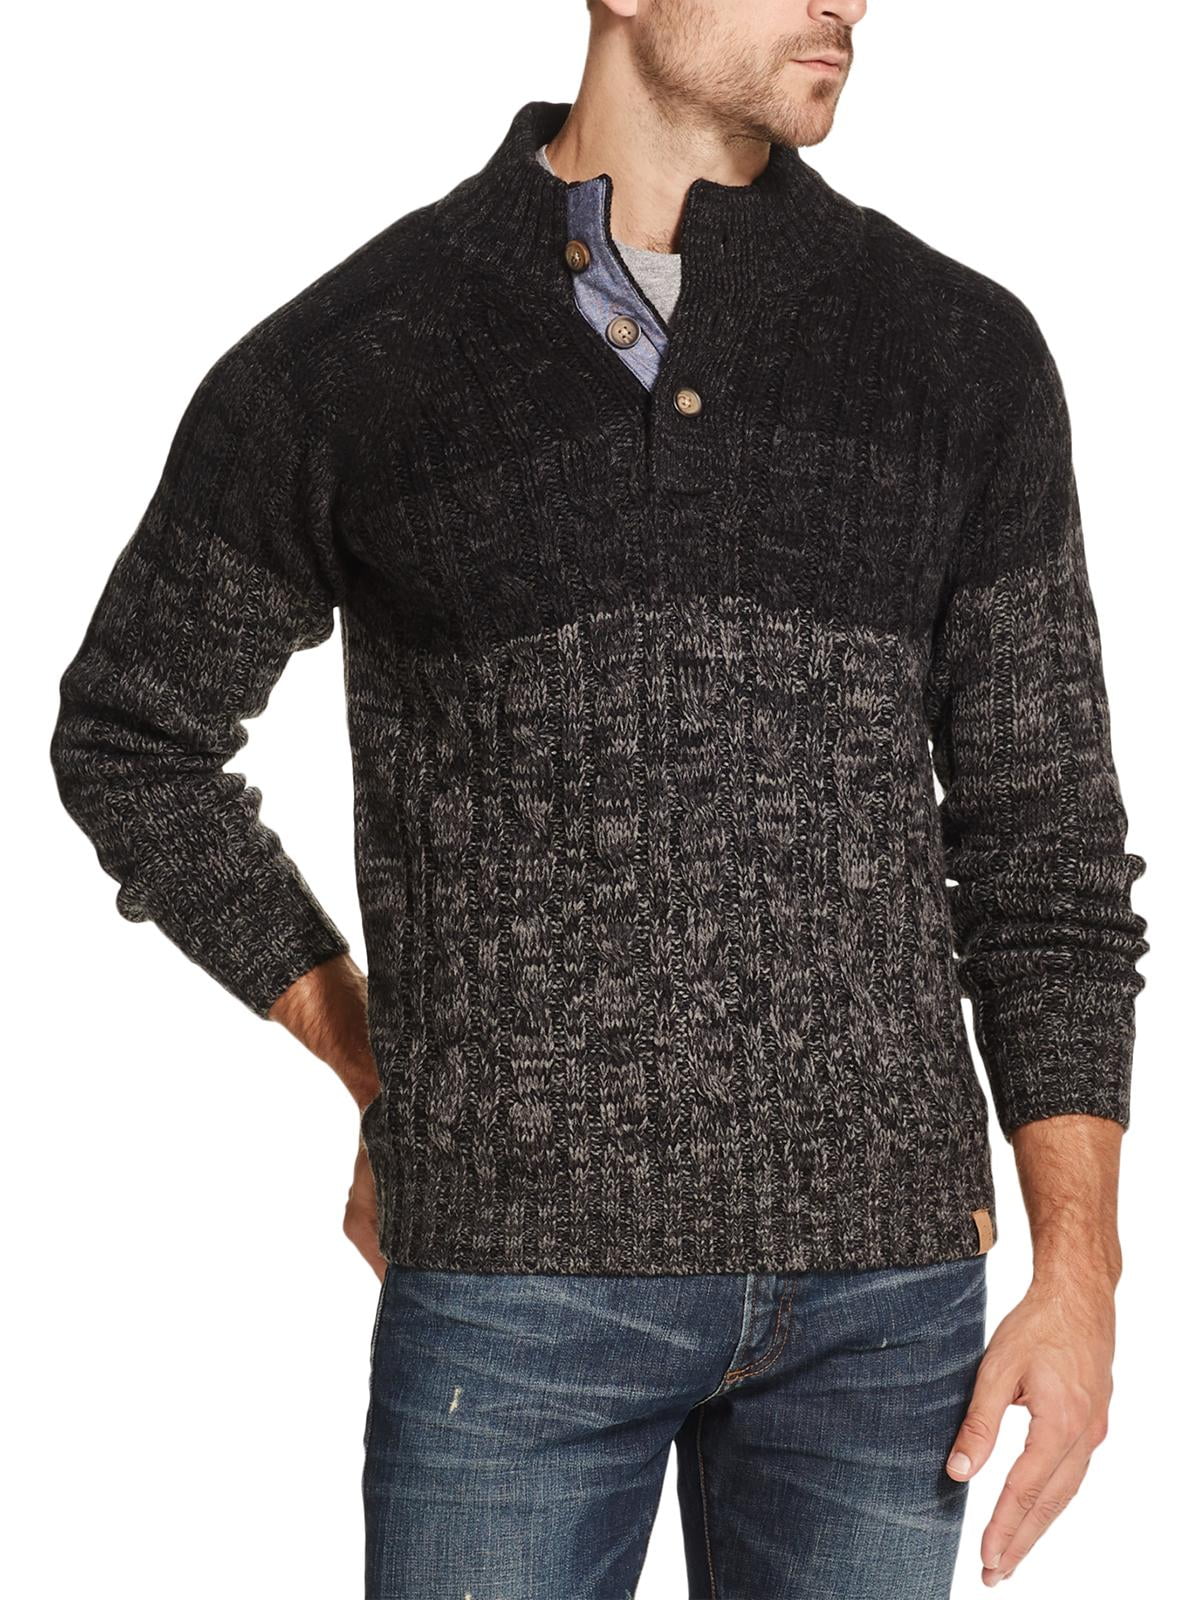 Weatherproof Vintage Mens Ombre Knit Sweater Black L - Walmart.com